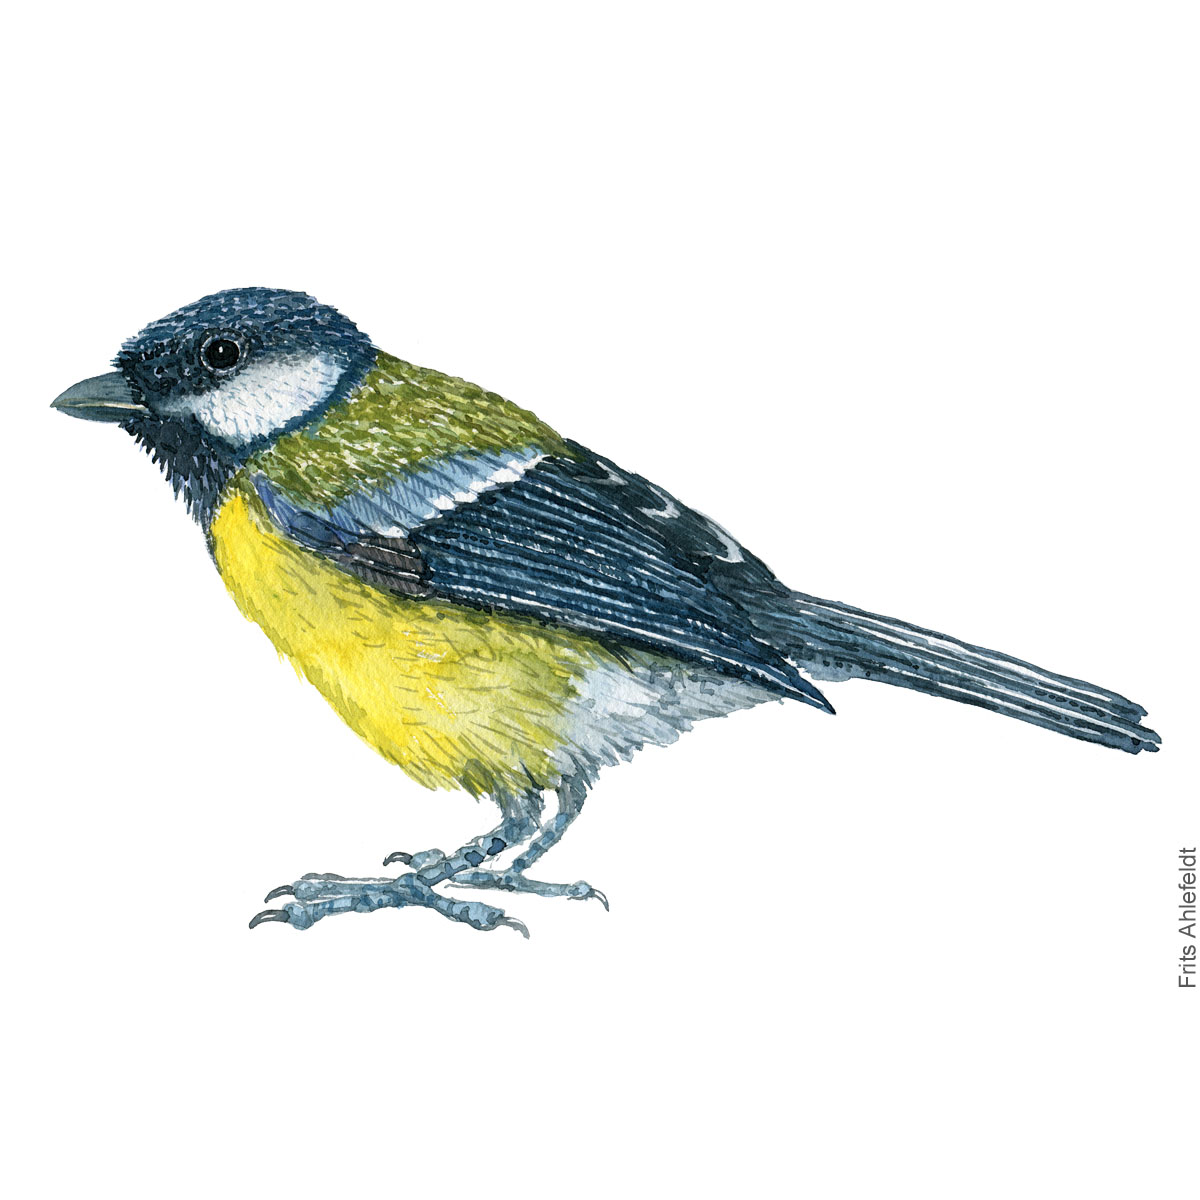 Musvit - Great tit bird watercolor illustration. Painting by Frits Ahlefeldt. Fugle akvarel